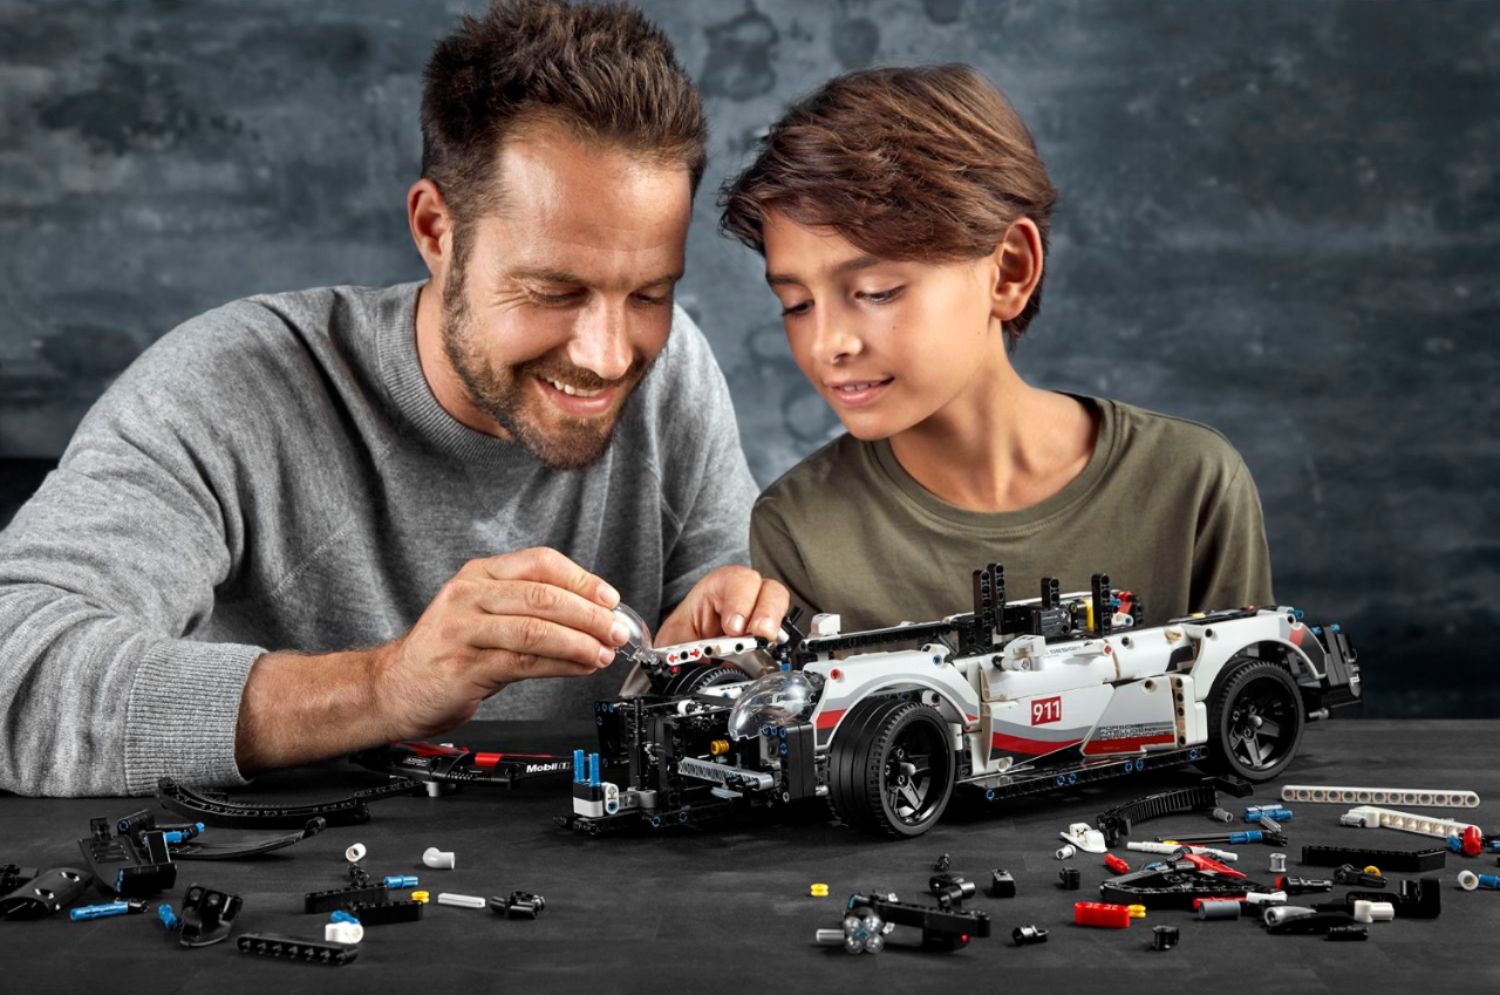 Best Buy: LEGO Technic Porsche 911 RSR 42096 6251551